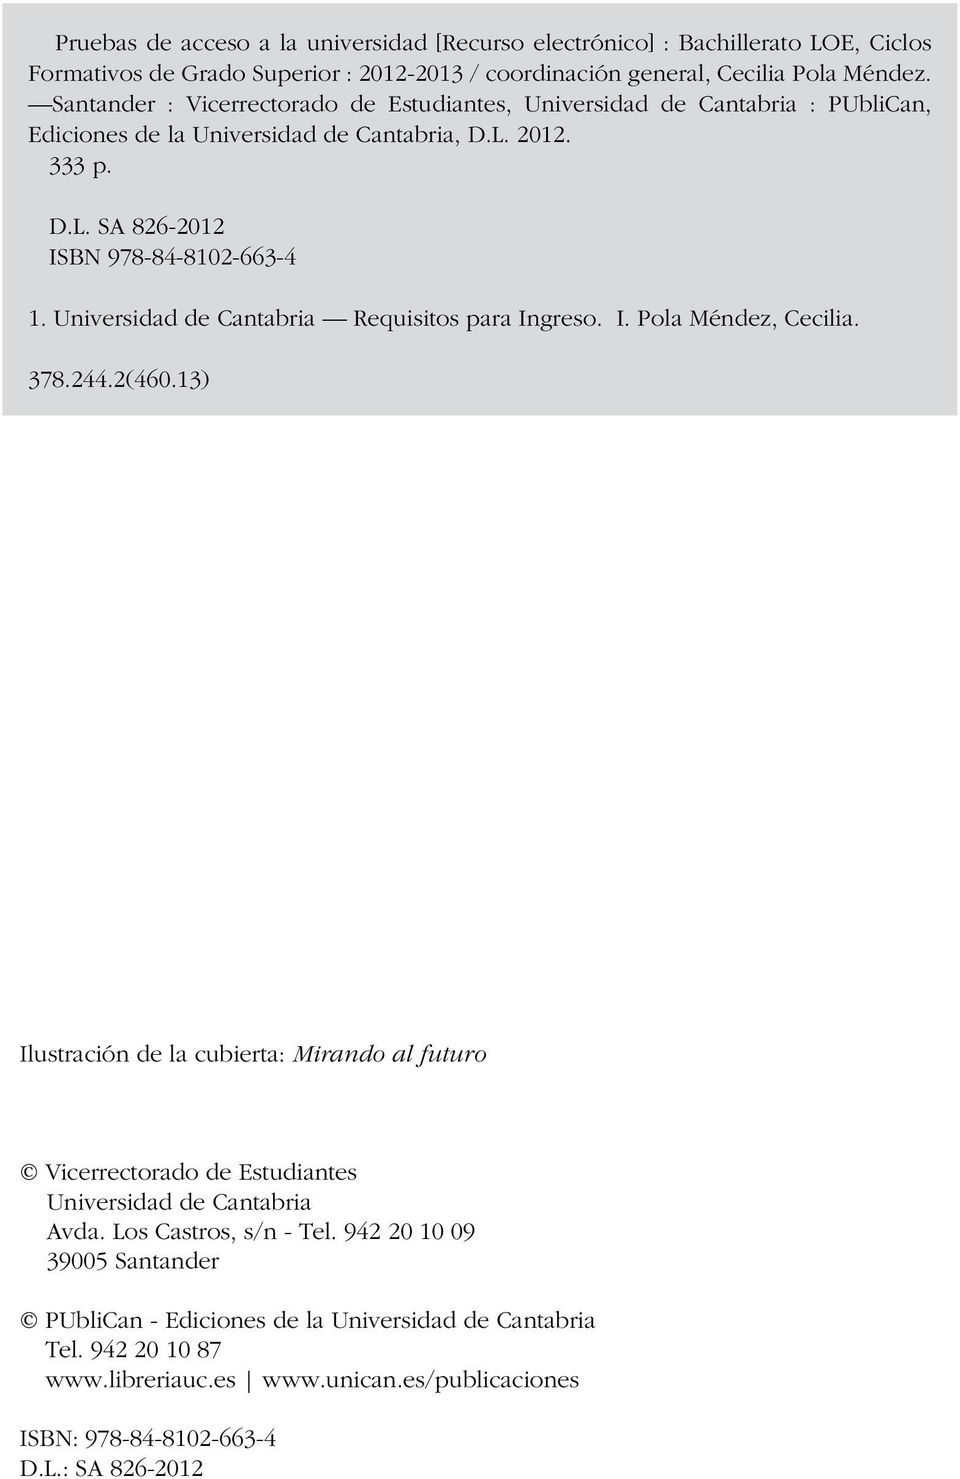 Universidad de Cantabria Requisitos para Ingreso. I. Pola Méndez, Cecilia. 378.244.2(460.